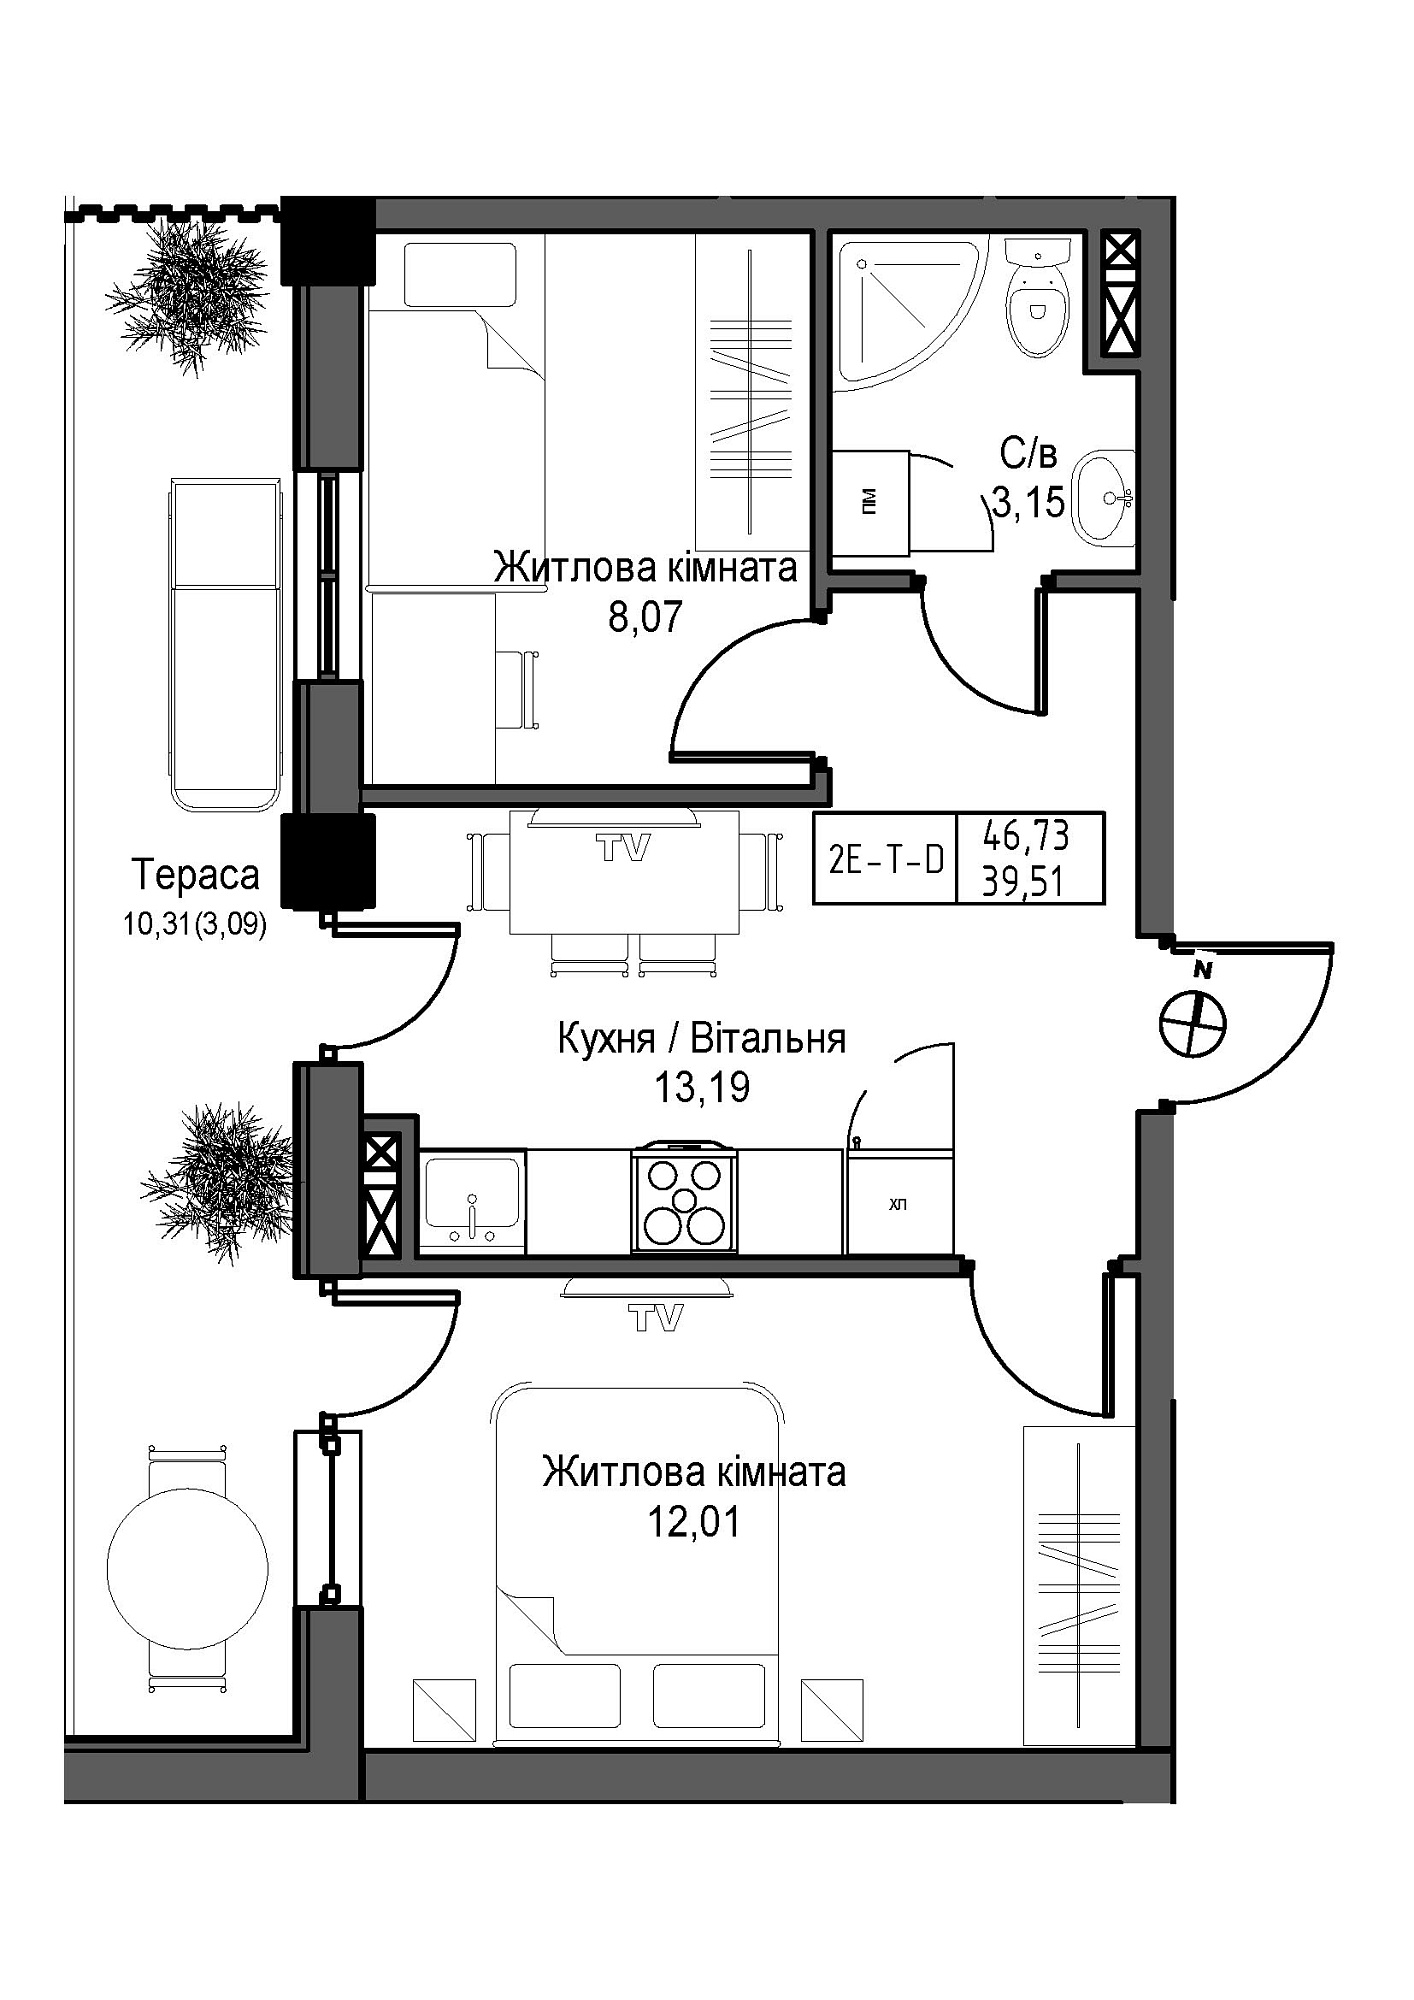 Планування 2-к квартира площею 39.51м2, UM-007-12/0001.